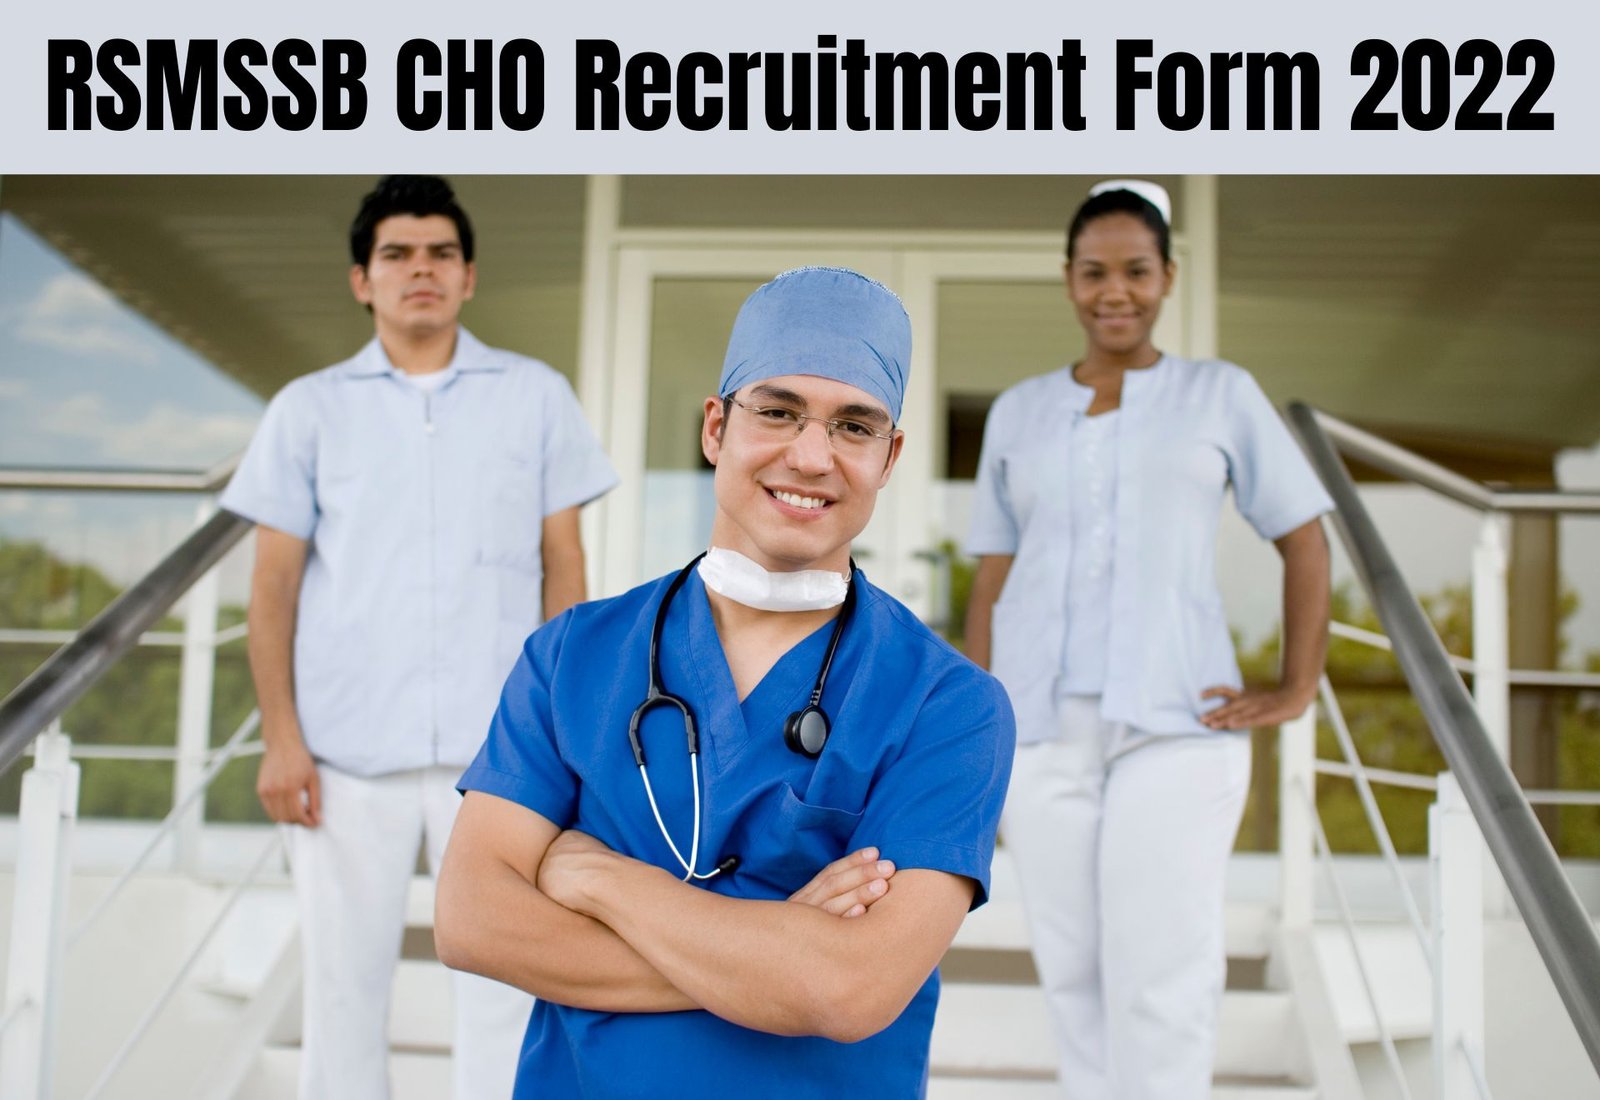 RSMSSB Community Health Officer (CHO) Recruitment Form 2022 | Salary | Age | Eligibility